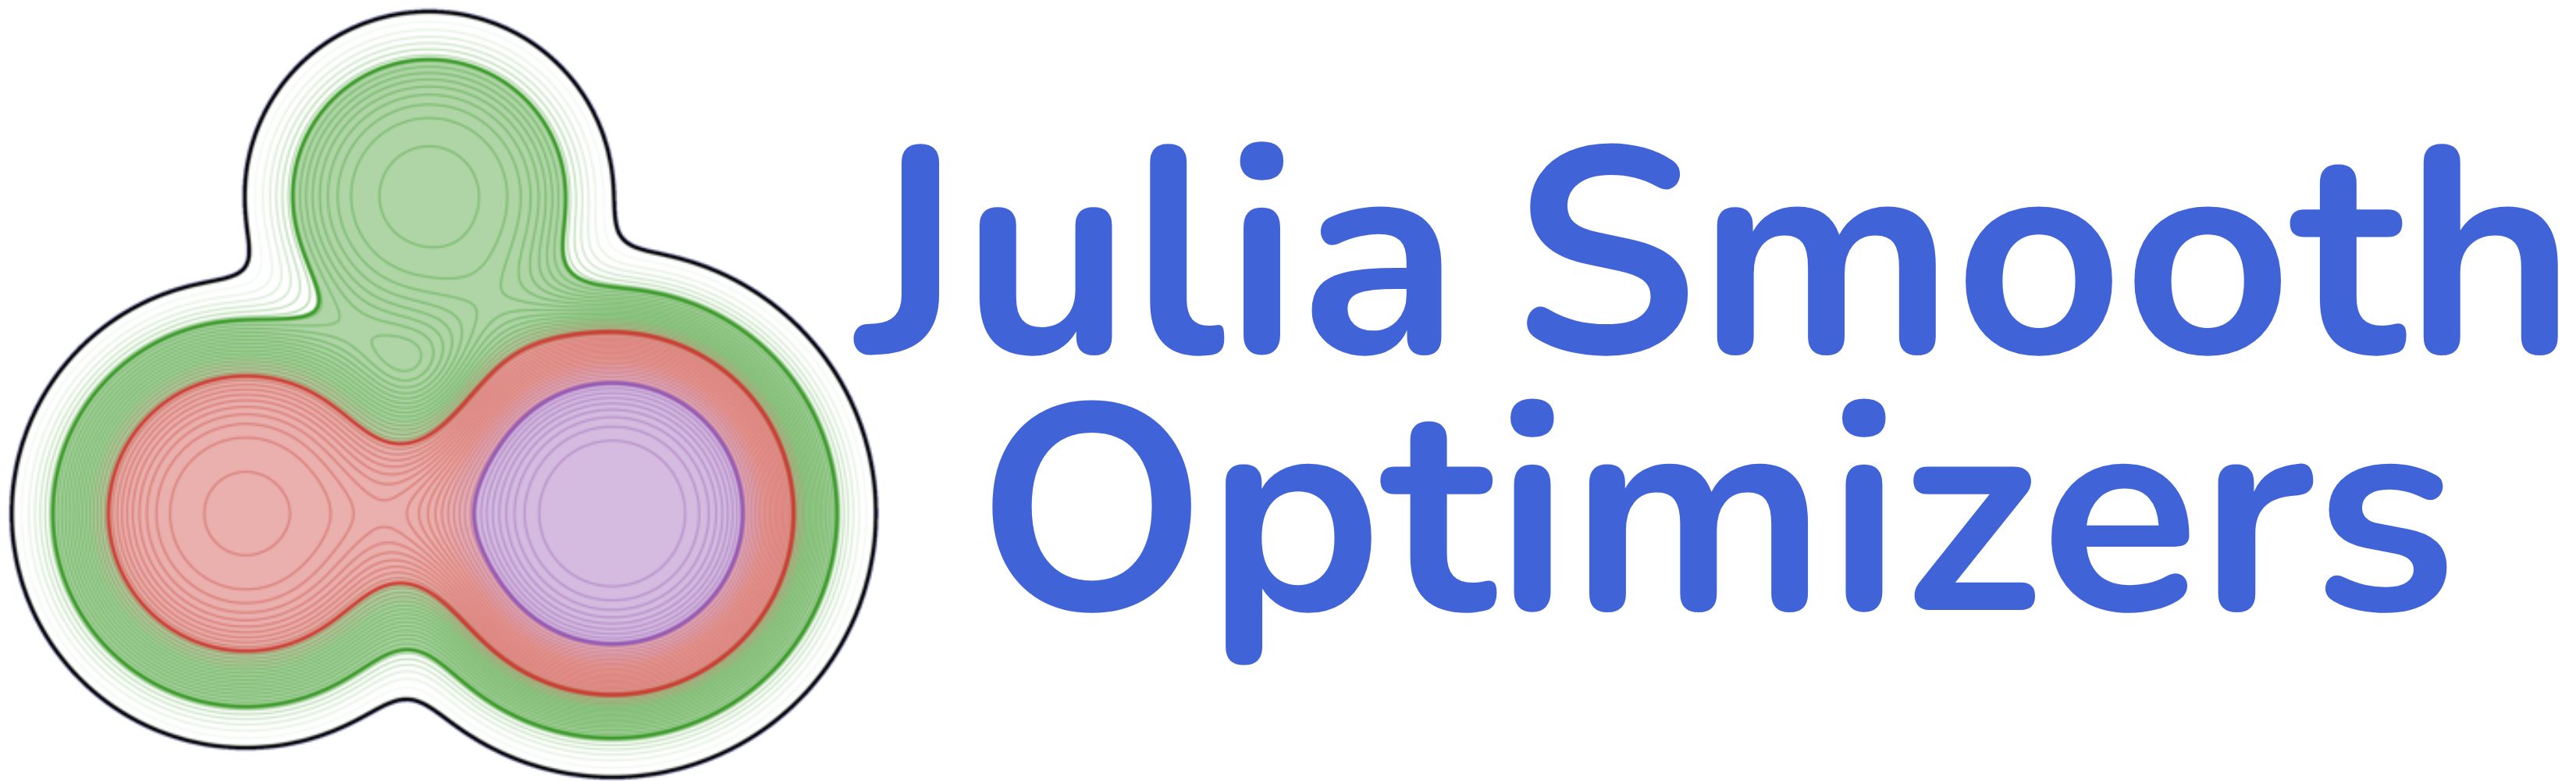 Julia Smooth Optimizers